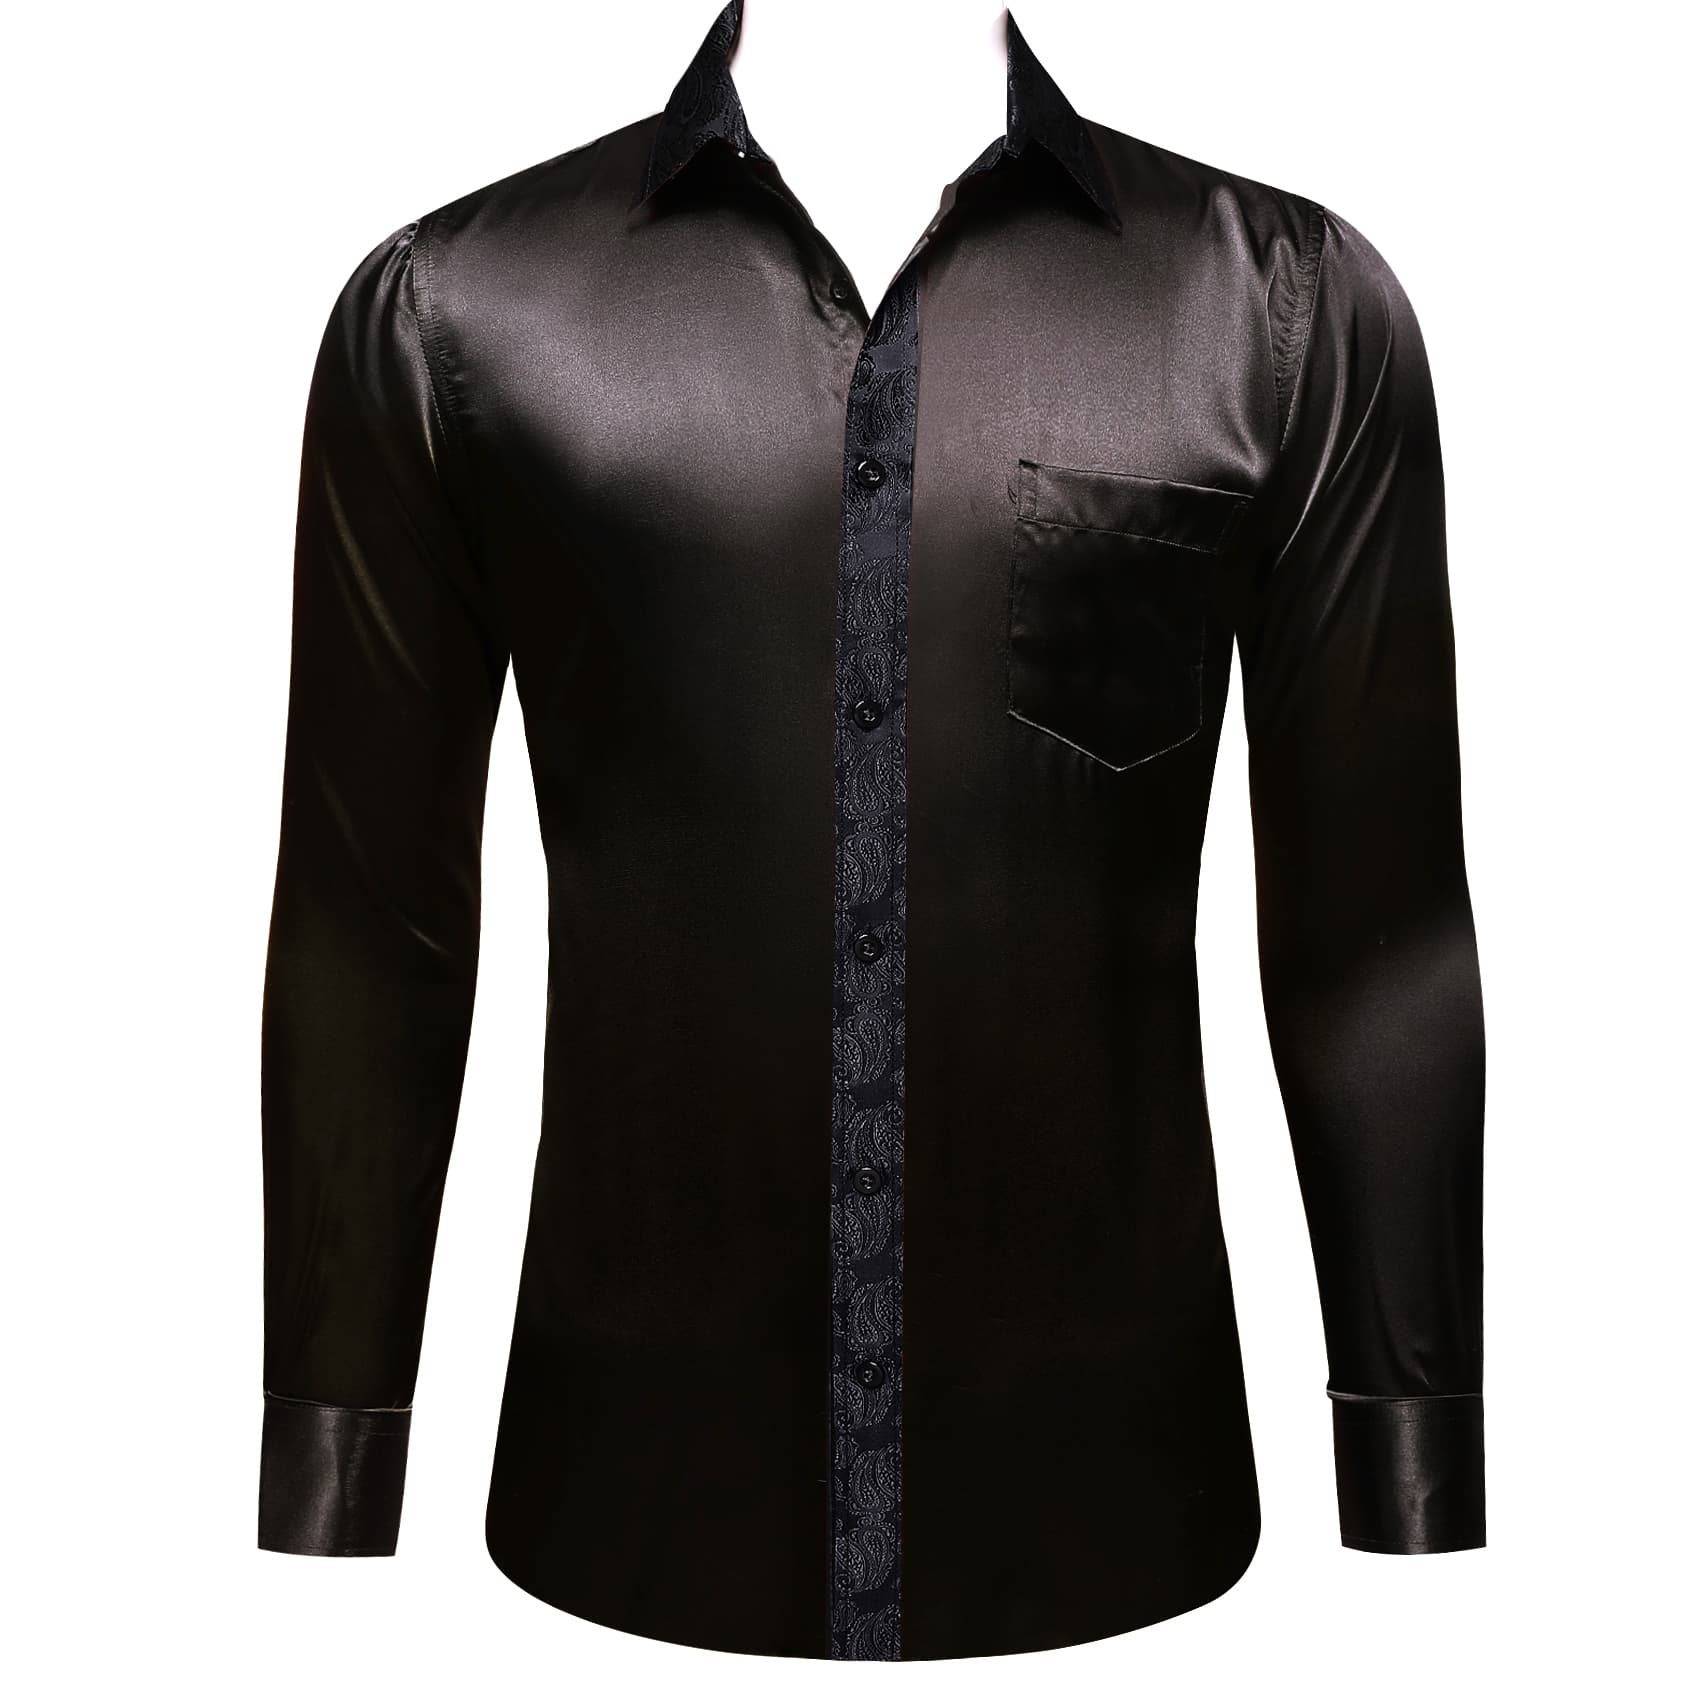 Black Dress shirt and black paisley collar shirt satin long sleeve shirt 